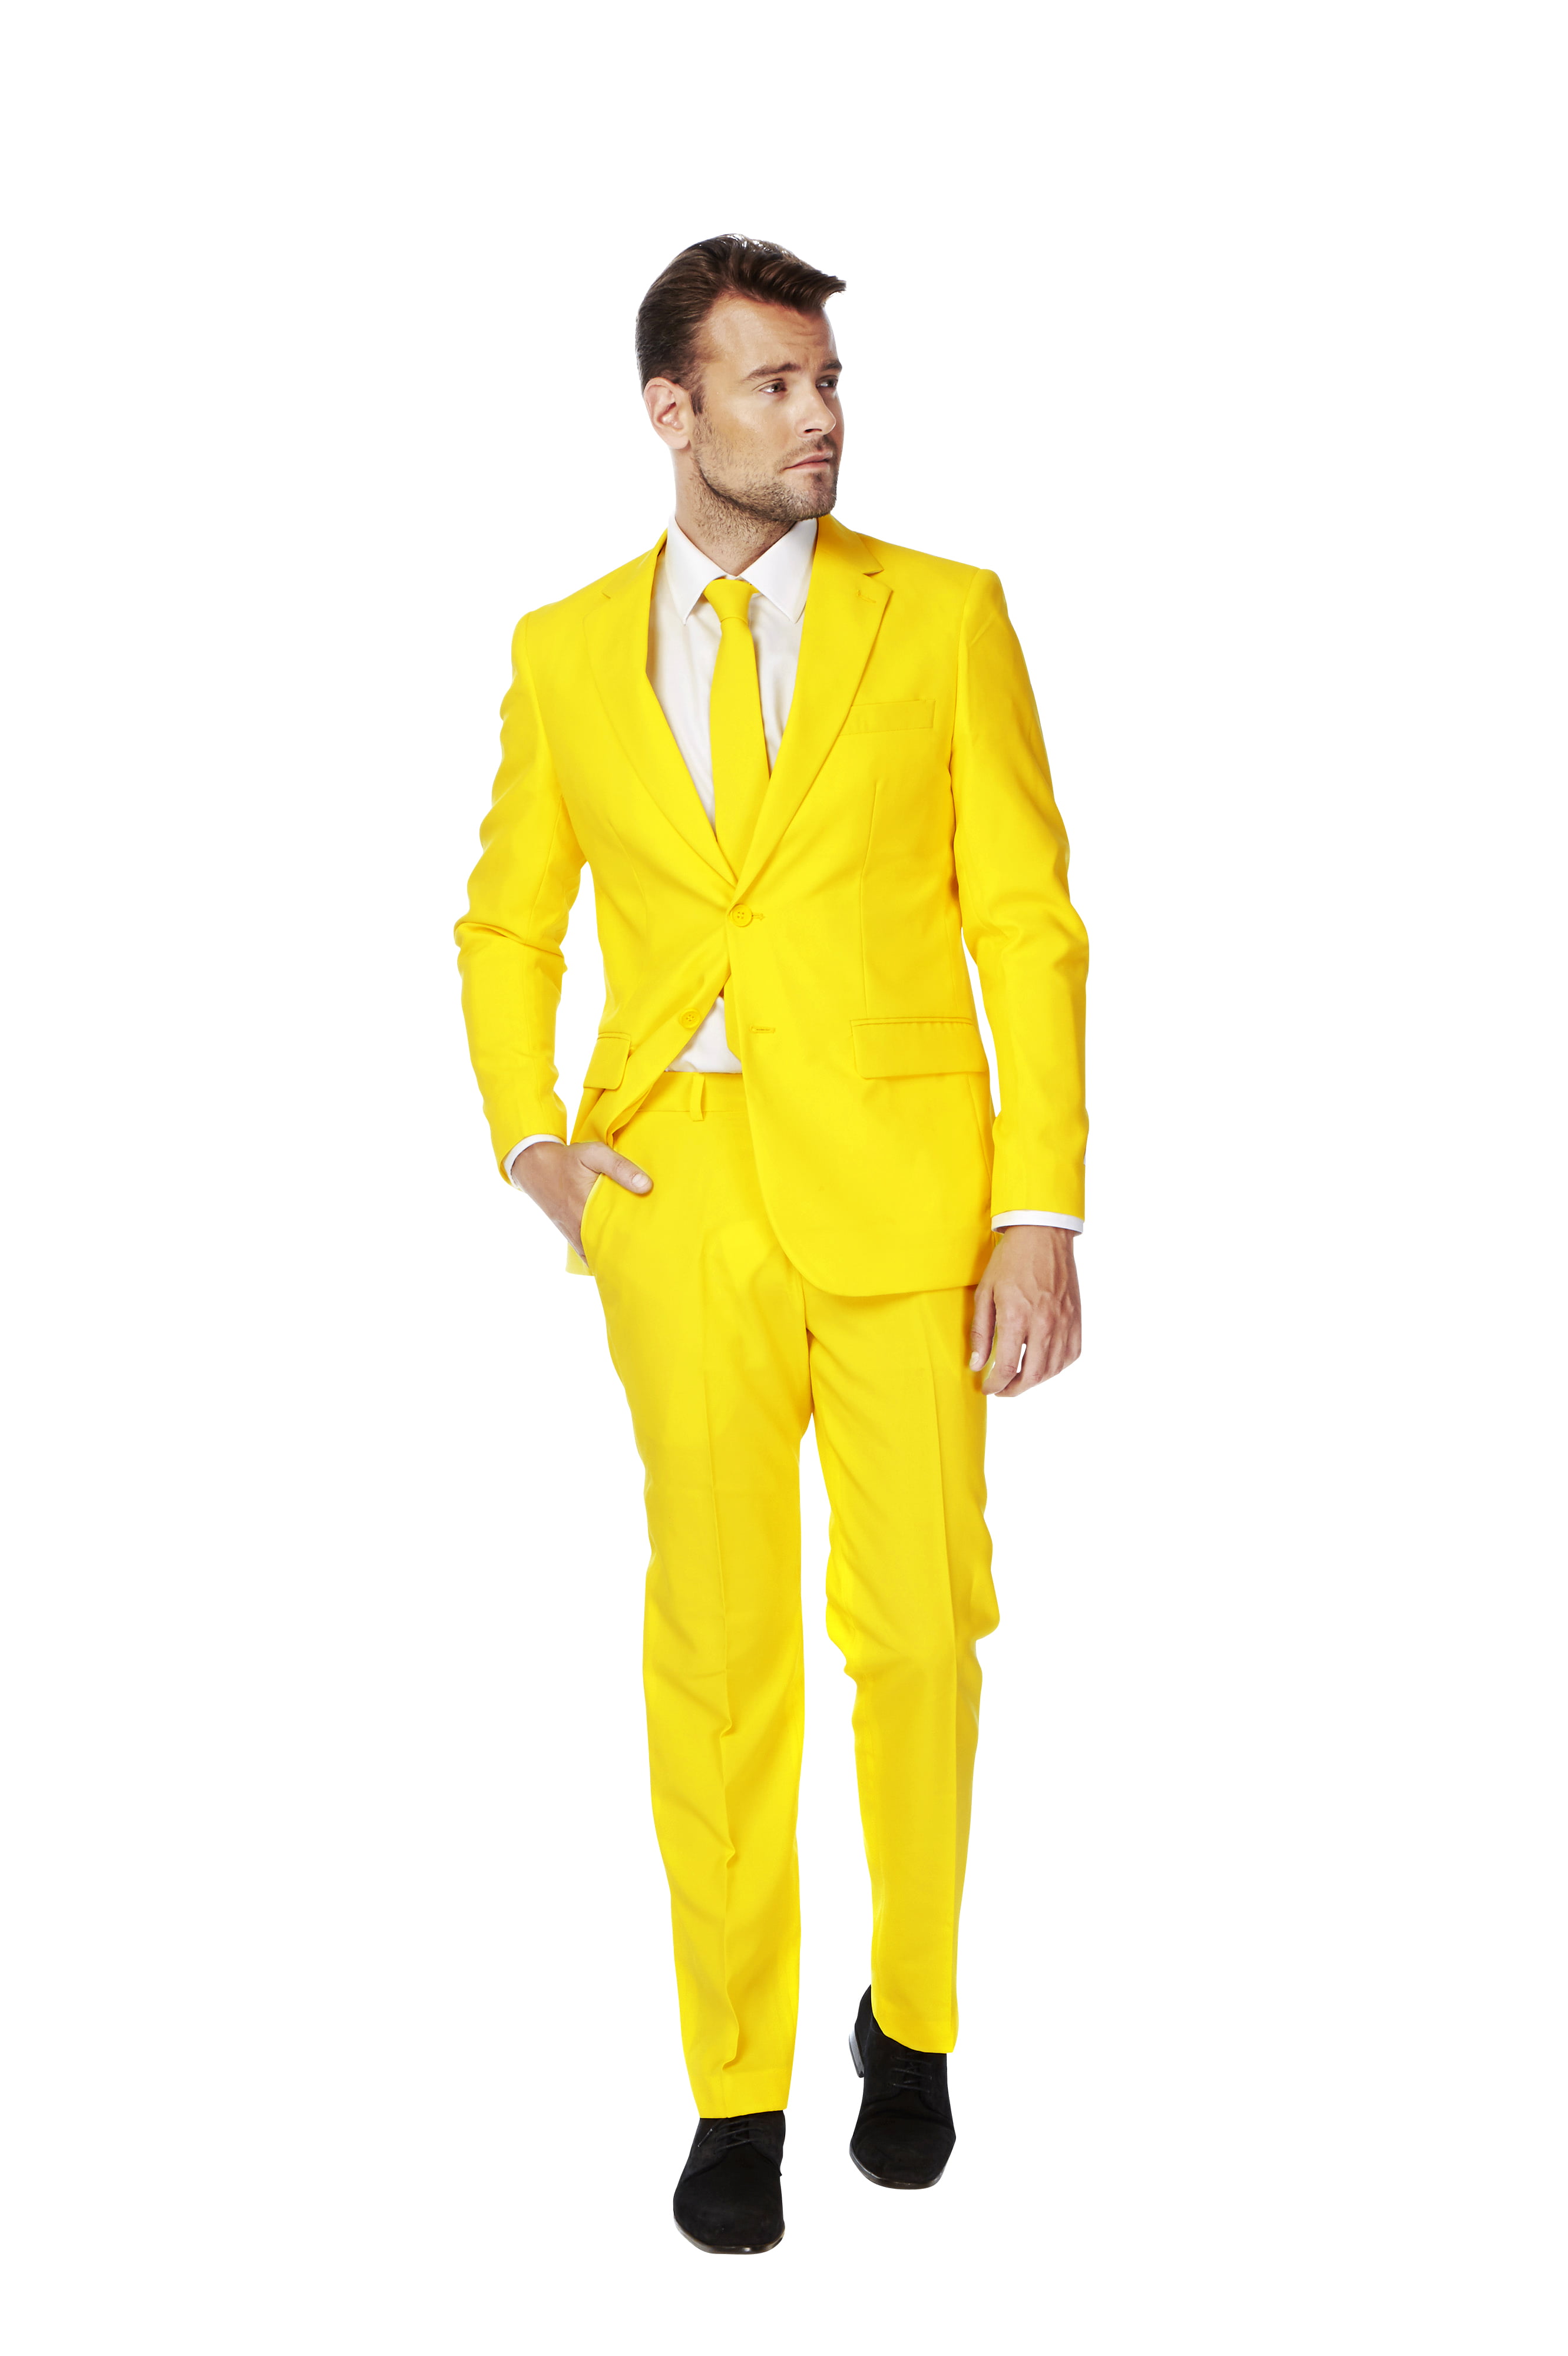 OppoSuits - OppoSuits Men's Yellow Fellow Solid Color Suit - Walmart ...